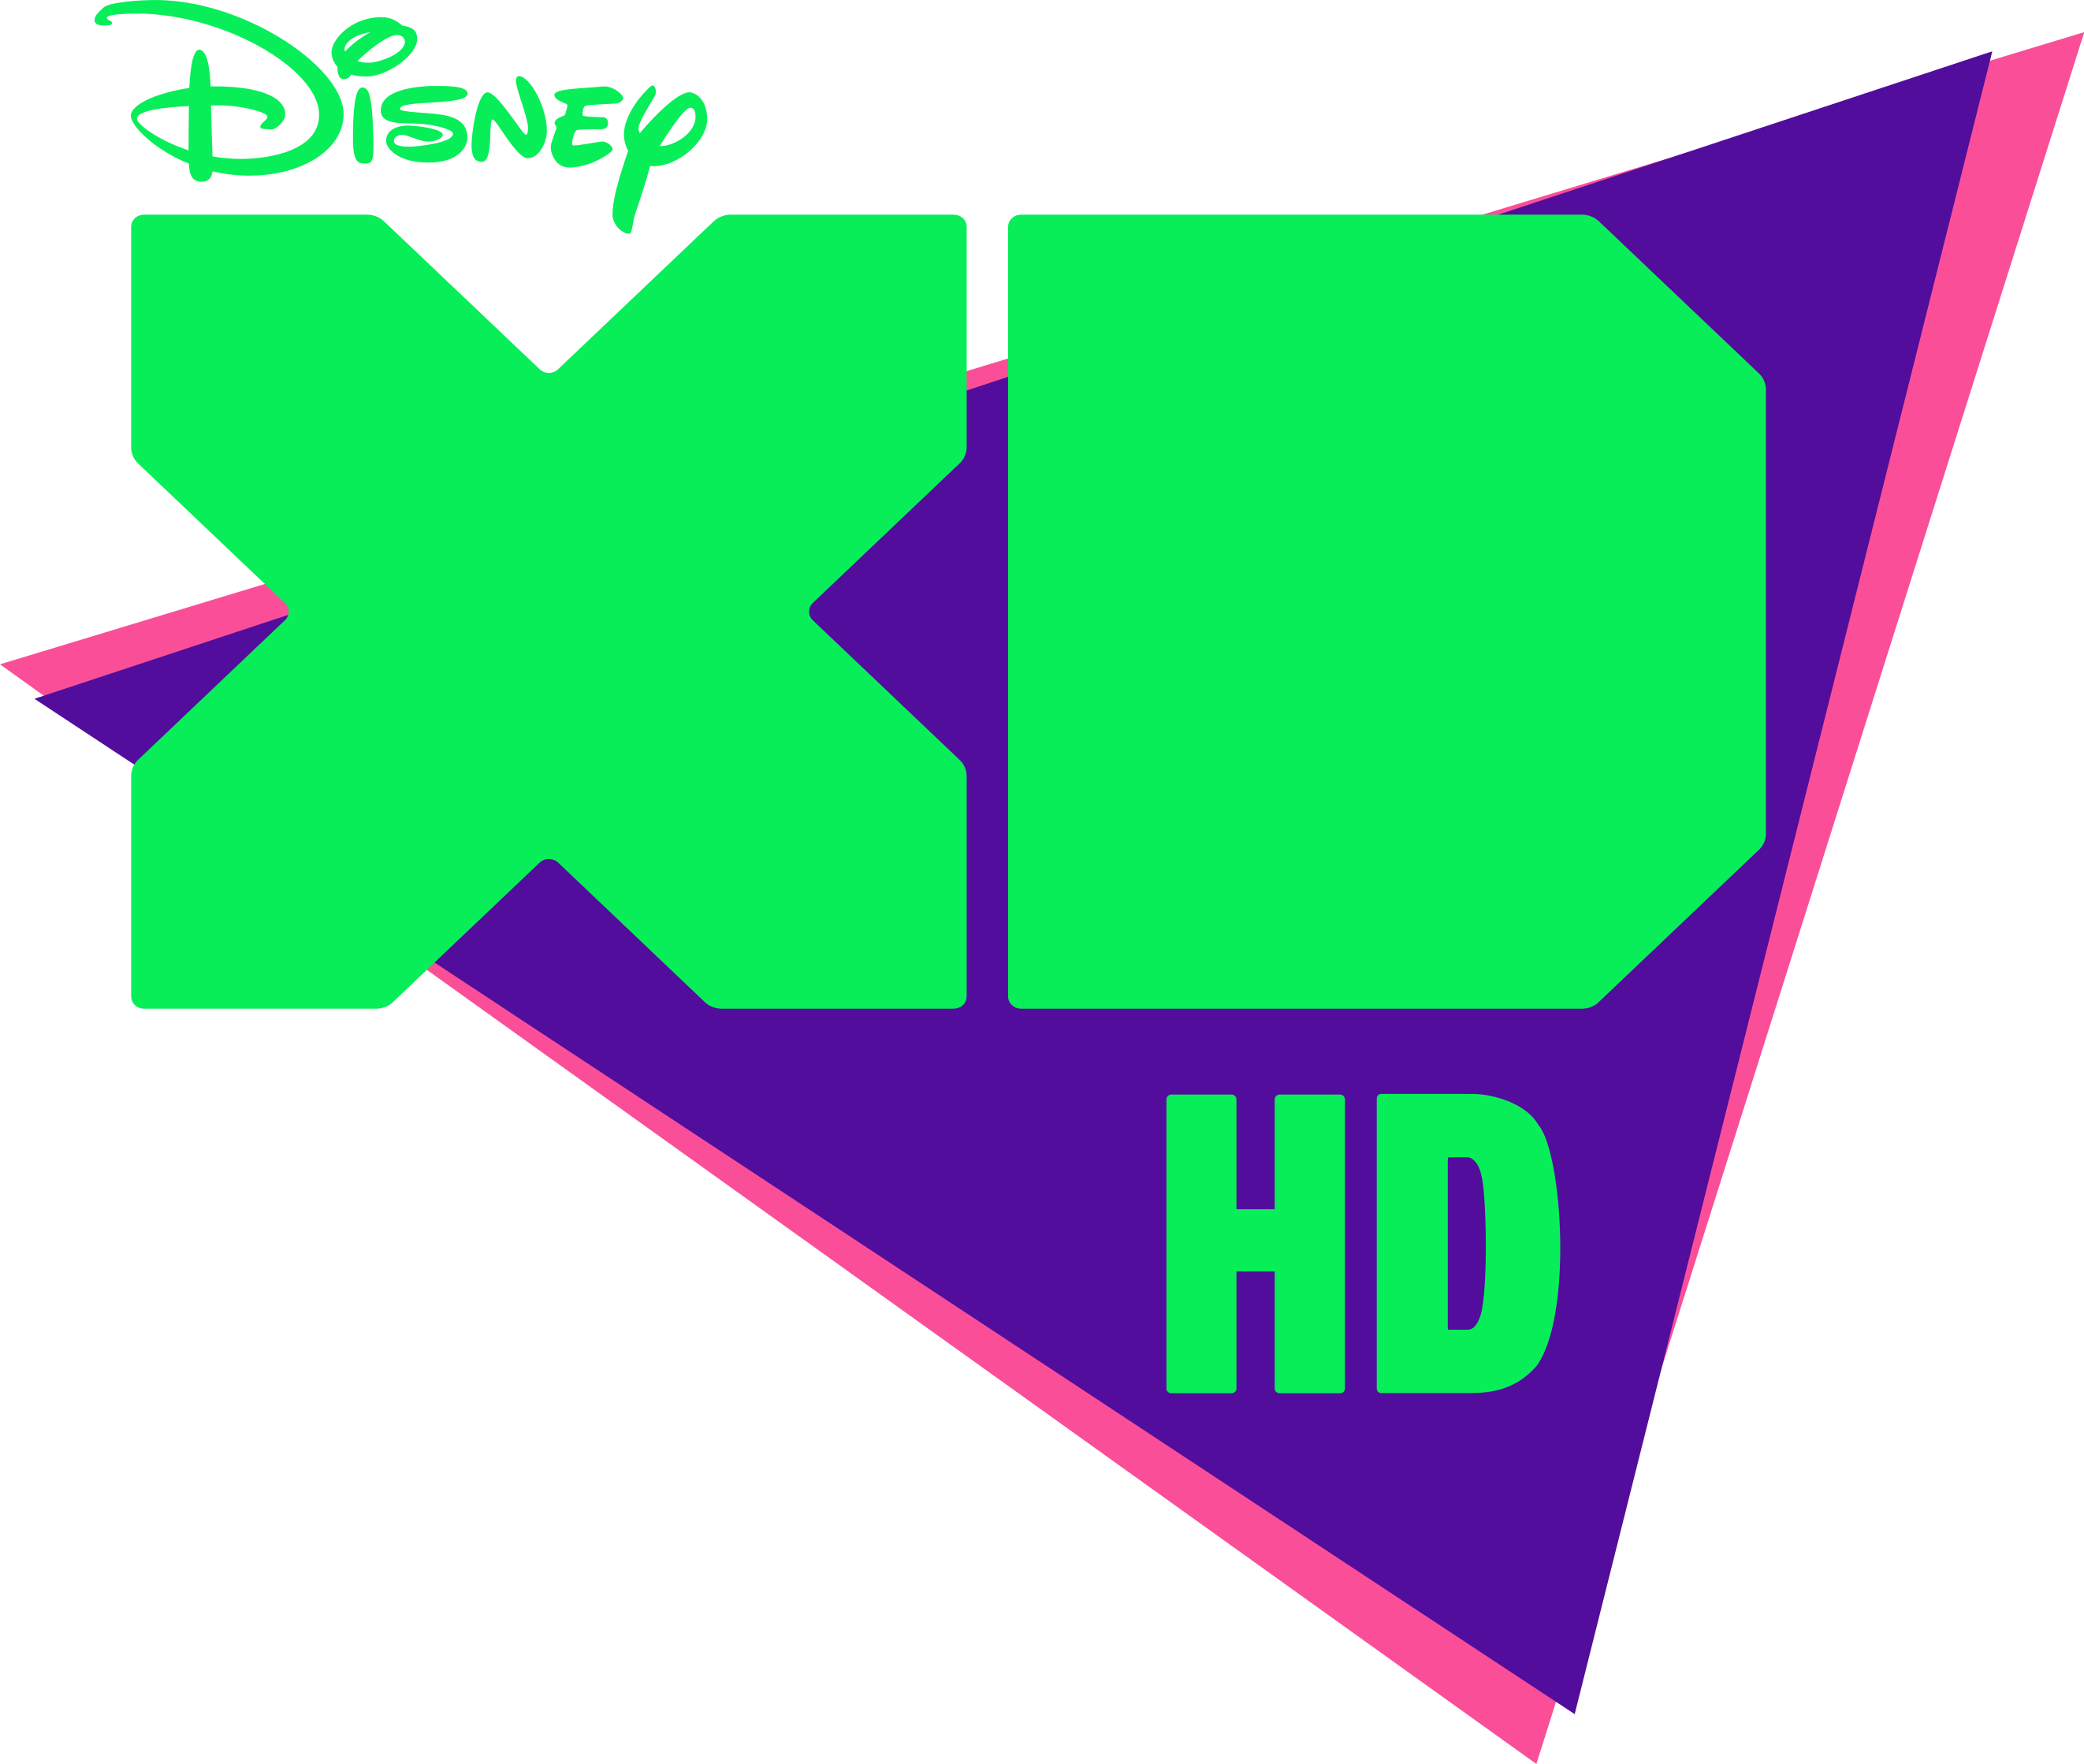 Disney Channel HD Logo - Whats Your Favorite Disney Show